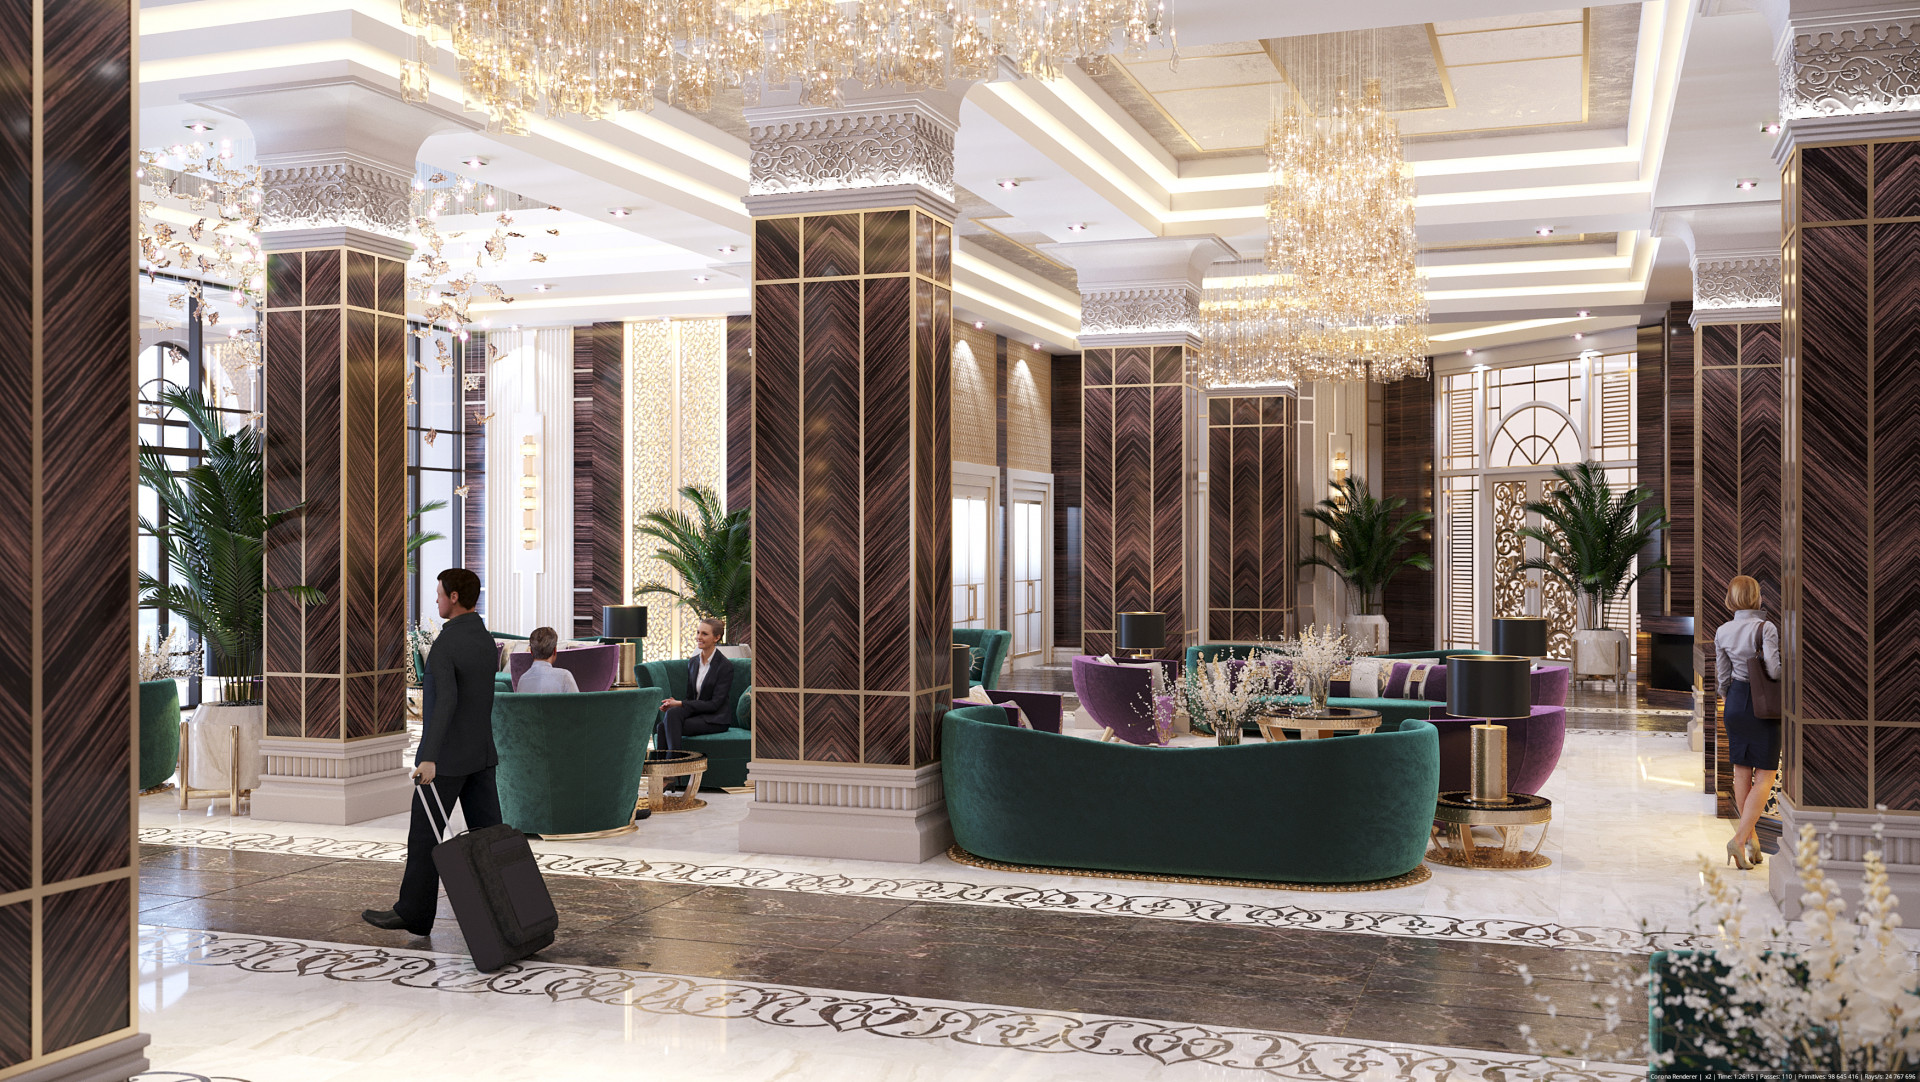 luxury hotels interior design